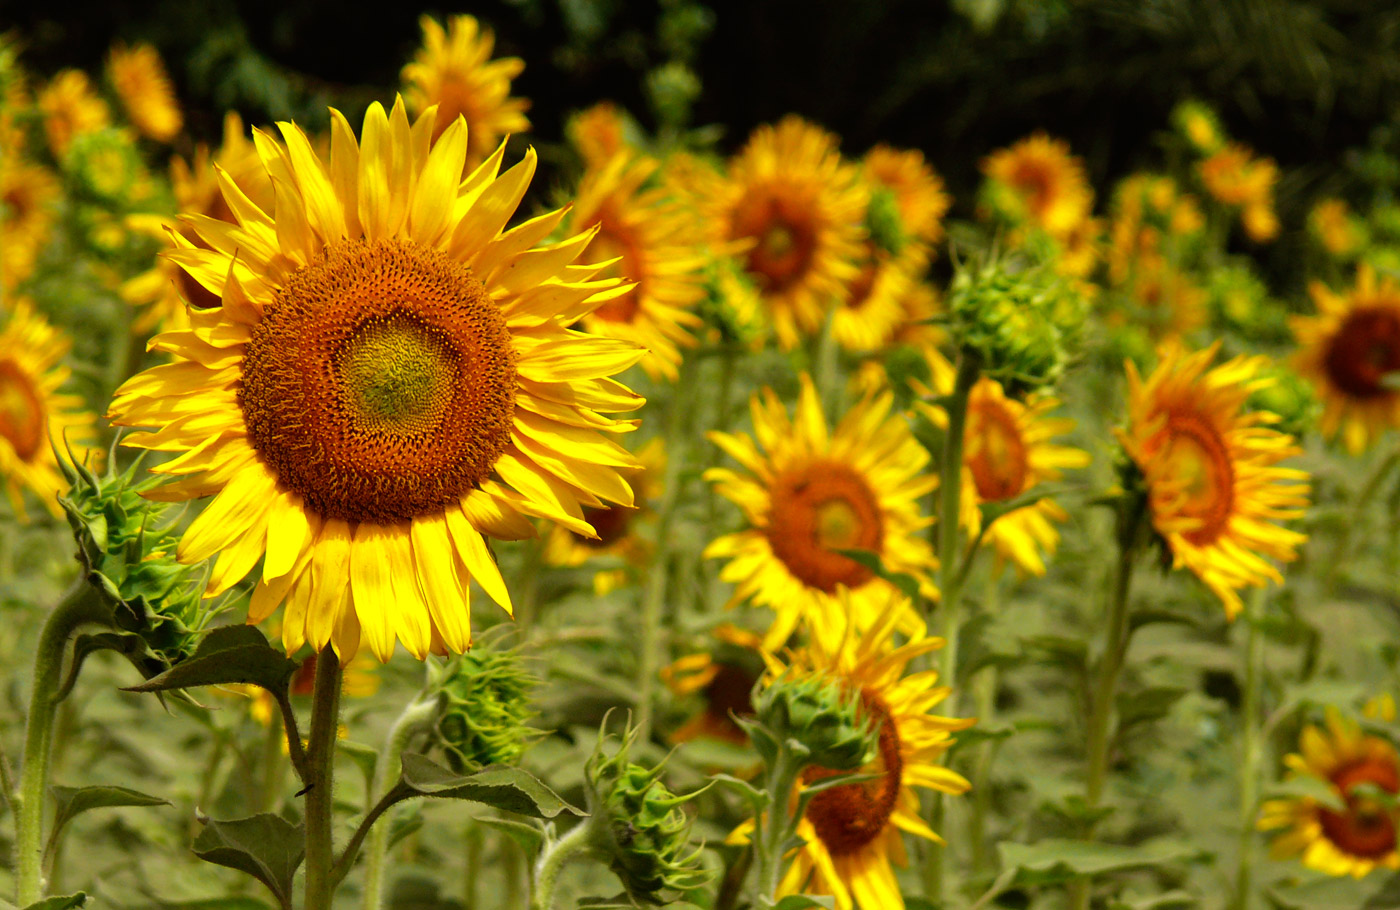 Sunflowers don't always face the sun, copyright Picturejockey : Navin Harish 2005-2013